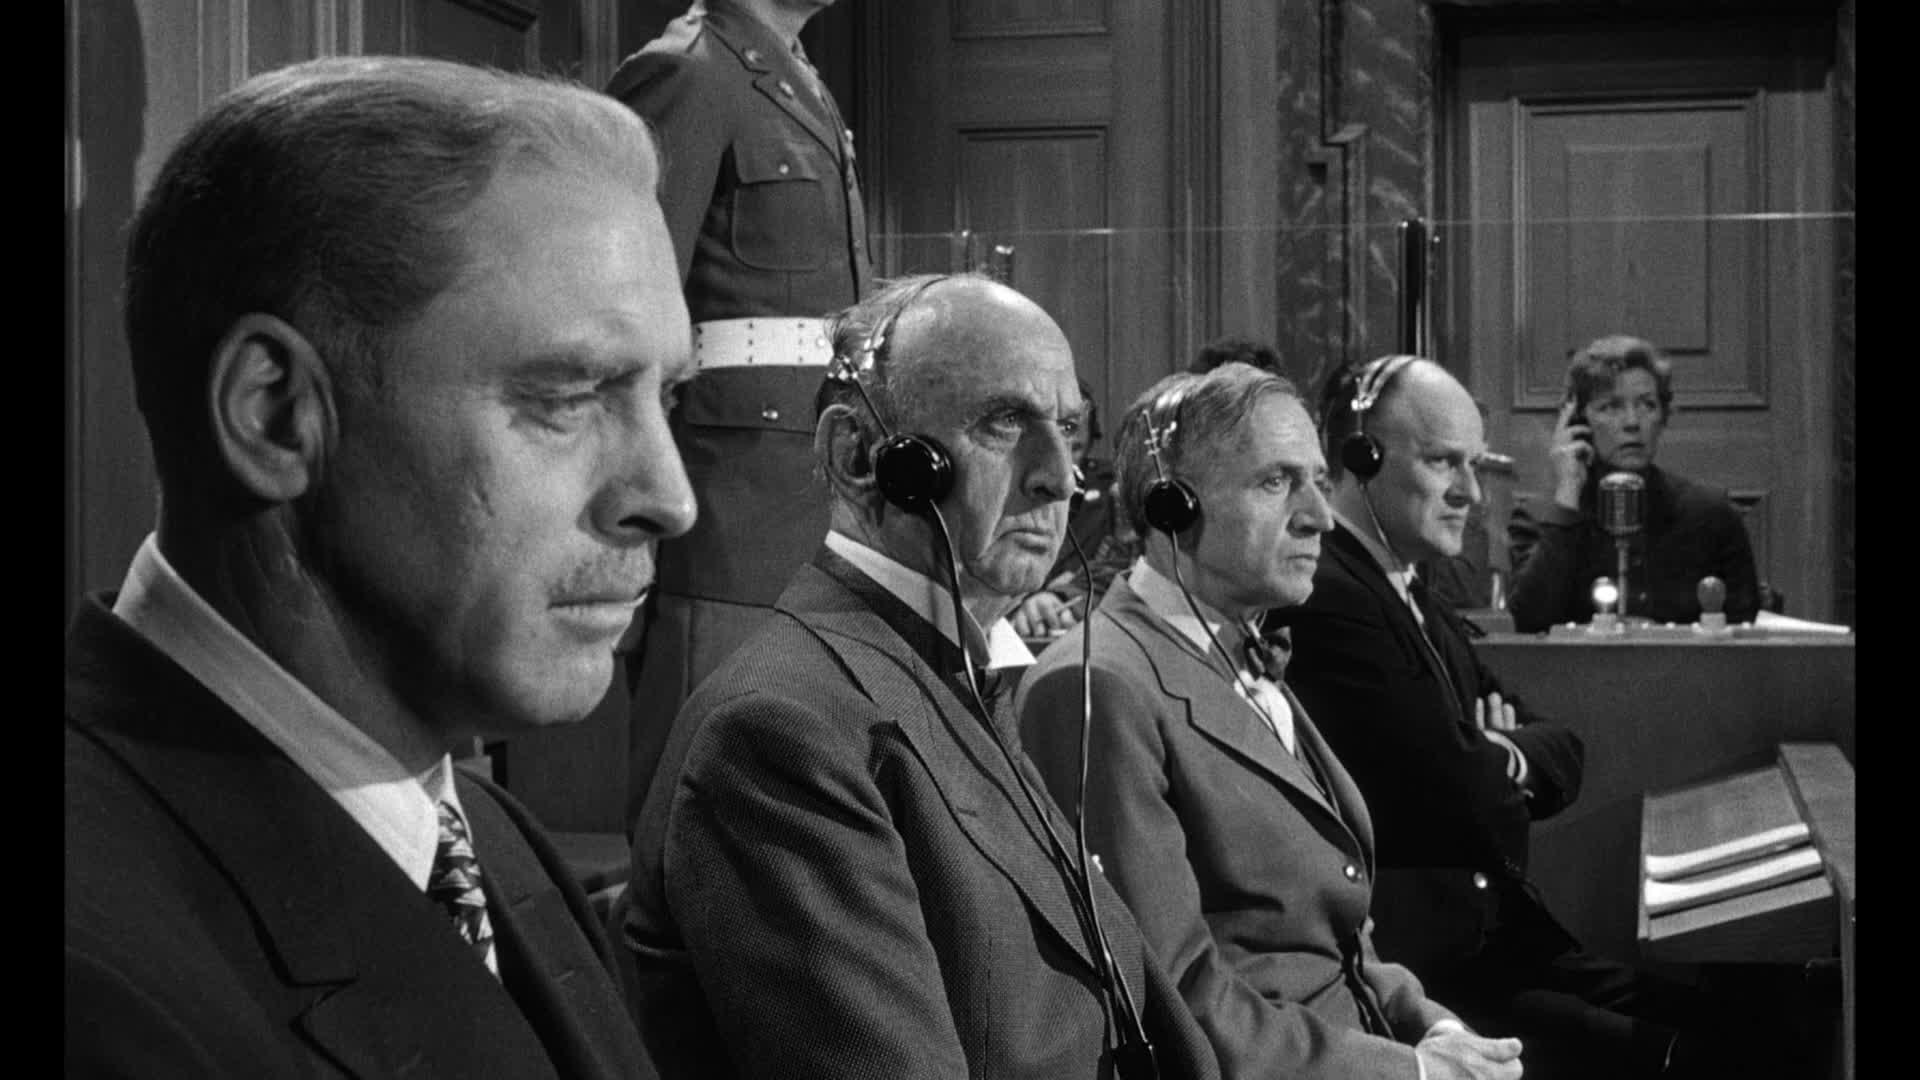 nuremberg judgment trial nazi movies judgement 1961 america trump donald modern films film germany saintpetersblog